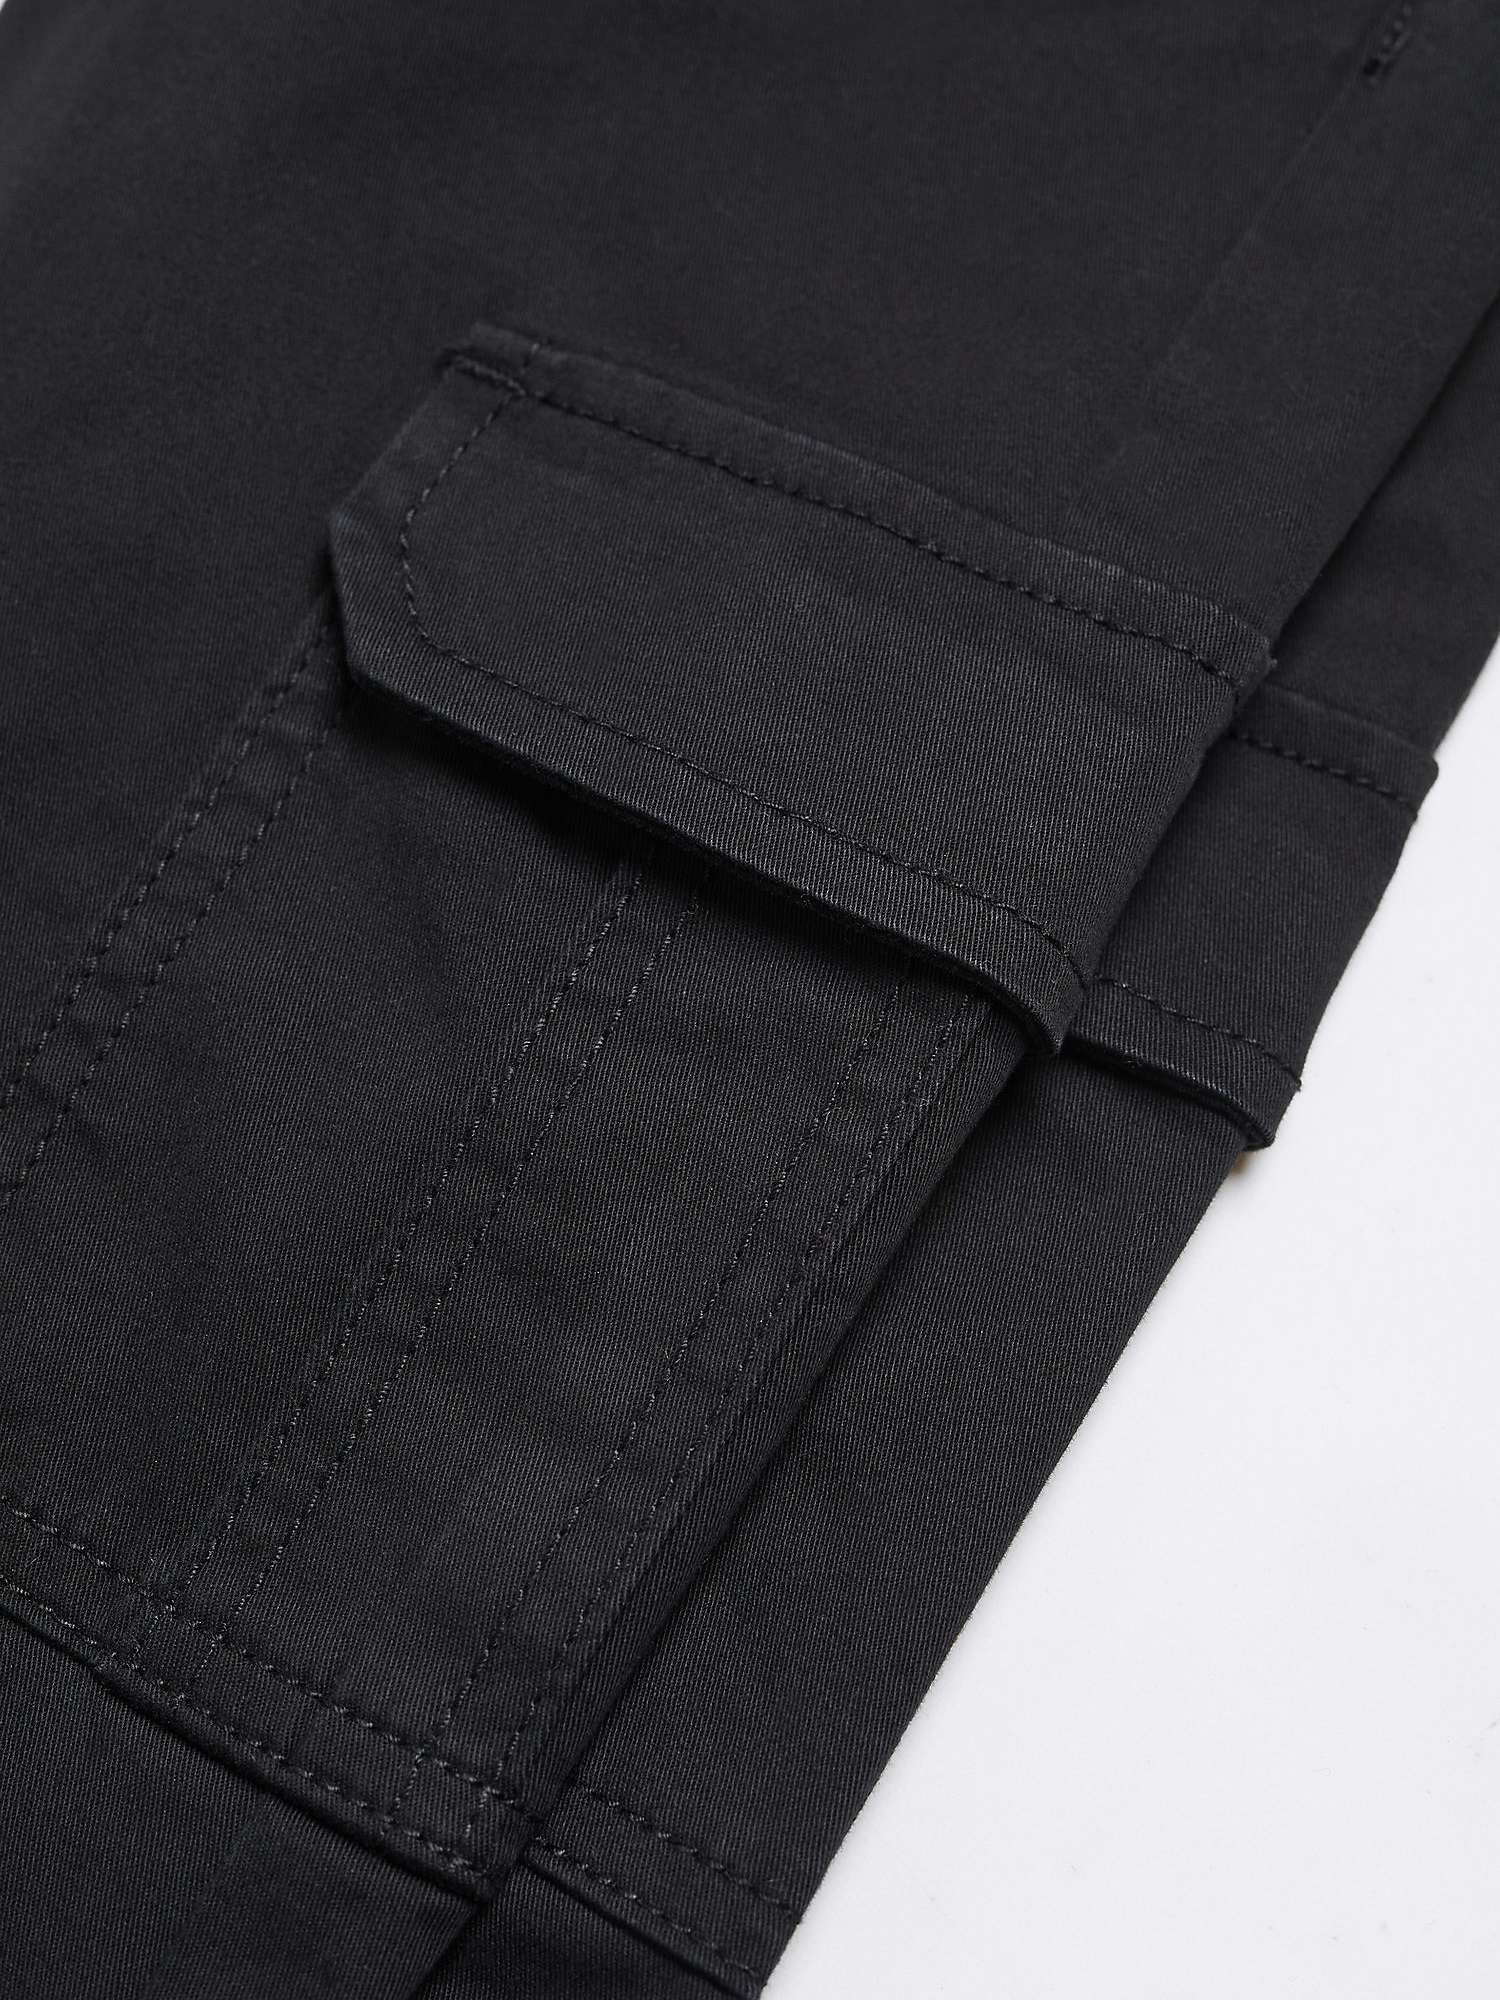 Mango Kids' Washed Cargo Trousers, Black at John Lewis & Partners